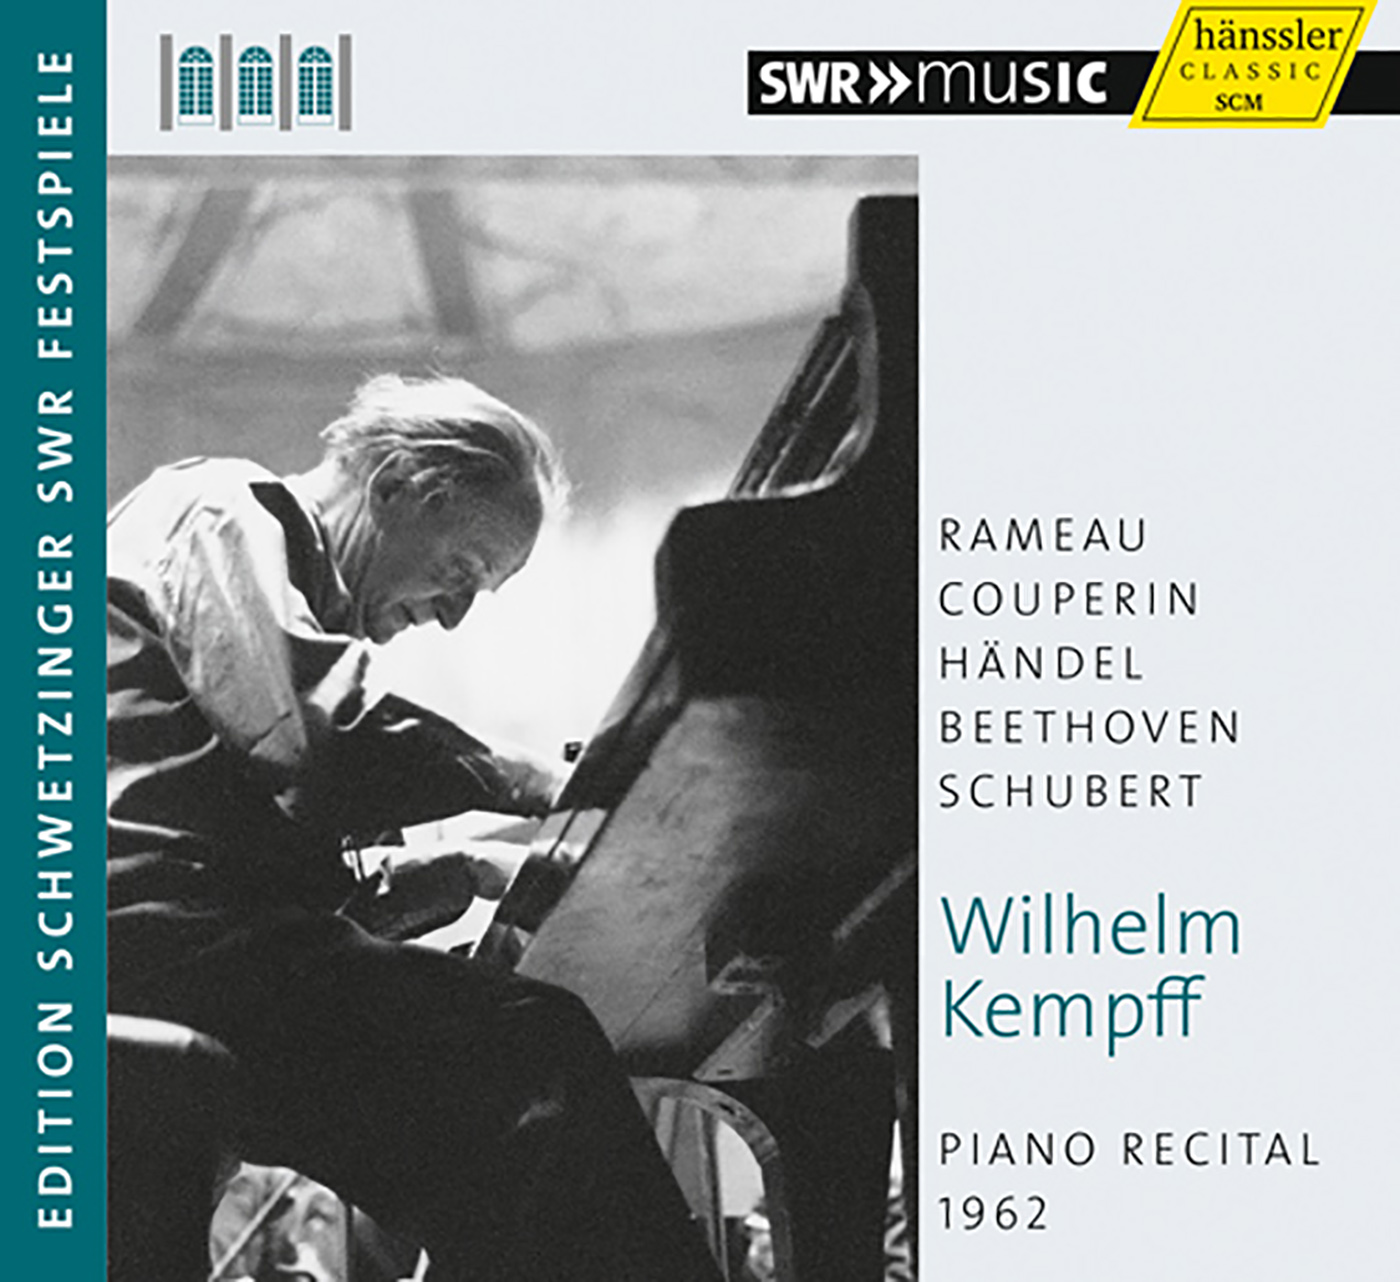 Piano Recital: Kempff, Wilhelm - RAMEAU, J.-P. / COUPERIN, F. / HANDEL, G.F. / MOZART W.A. / BEETHOVEN, L. van (Schwetzinger Festspiele Edition, 1962)